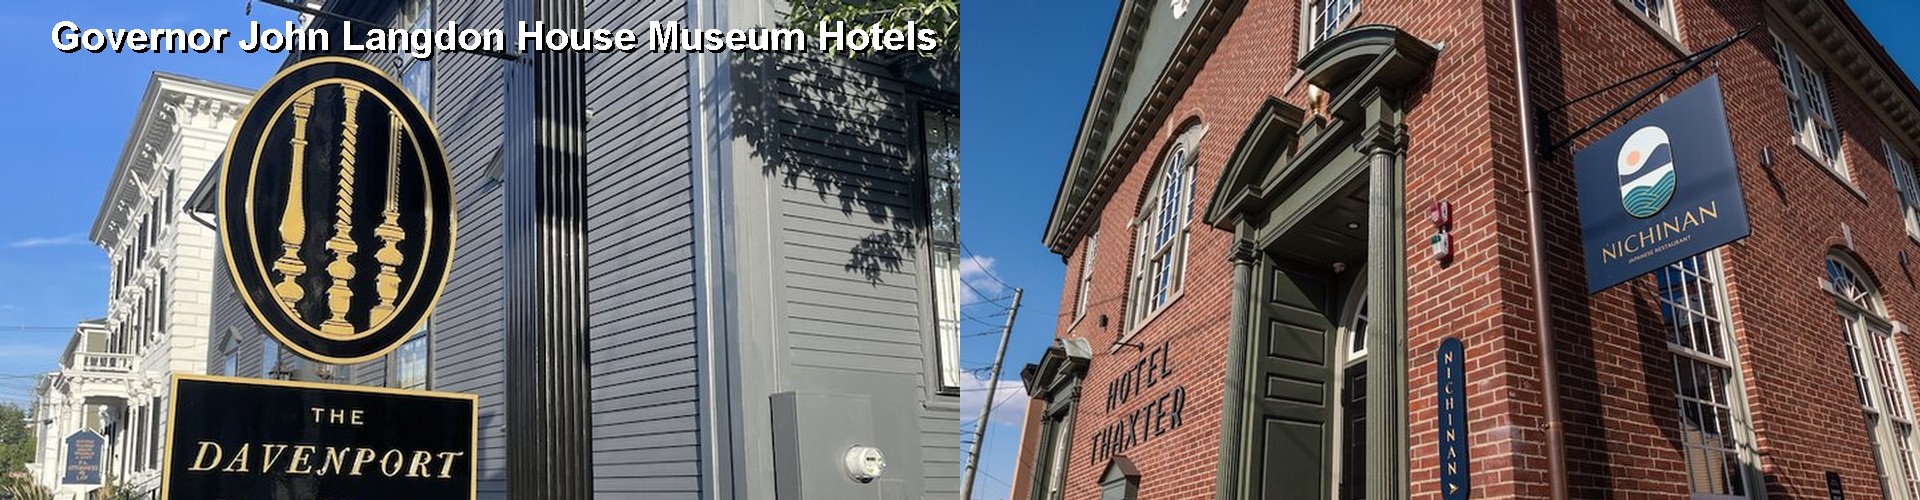 5 Best Hotels near Governor John Langdon House Museum